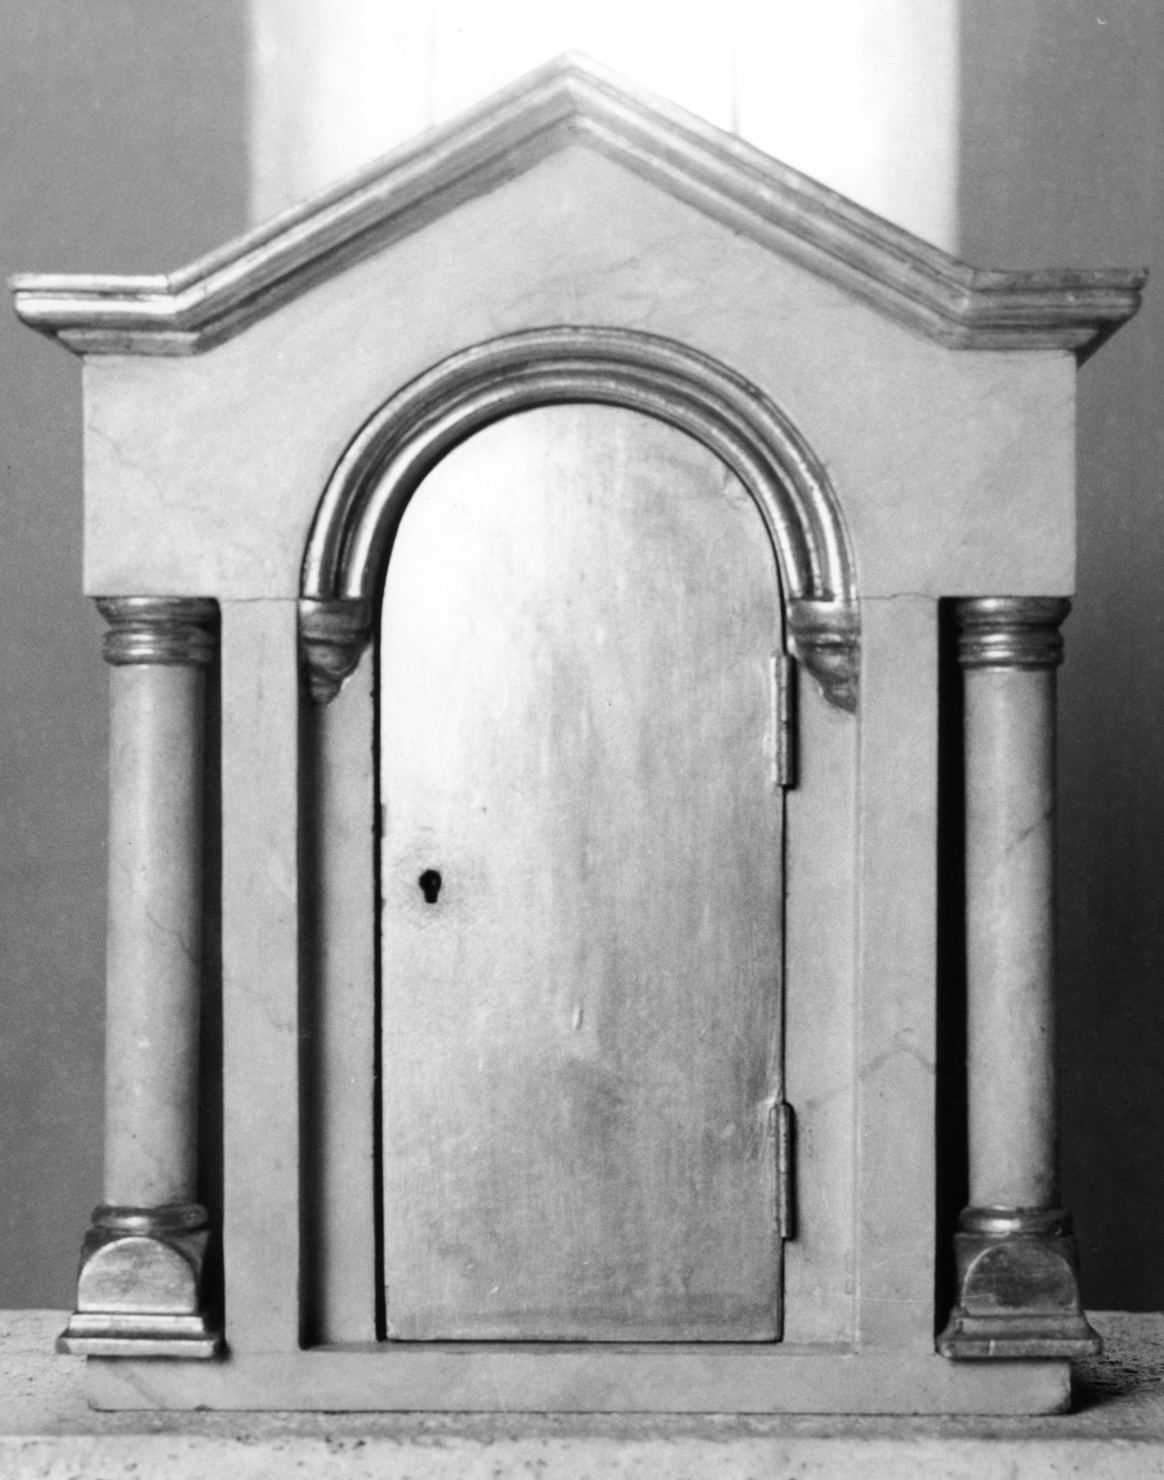 tabernacolo - a frontale architettonico - bottega toscana (primo quarto sec. XX)